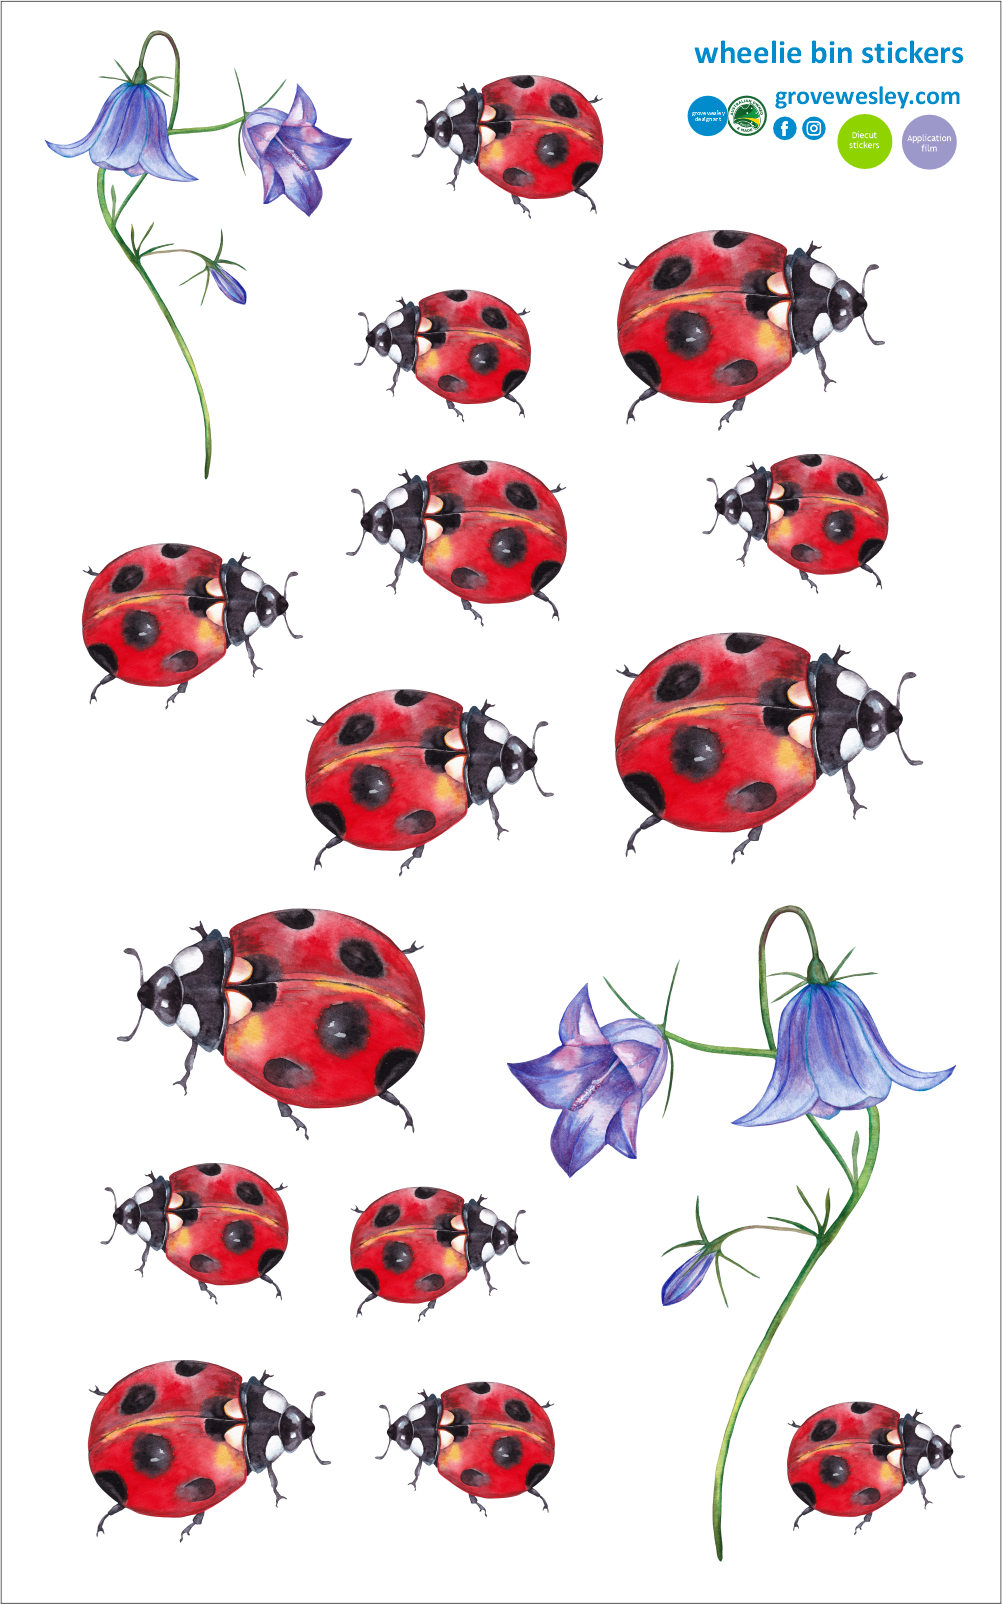 Ladybird stickers for wheelie bins